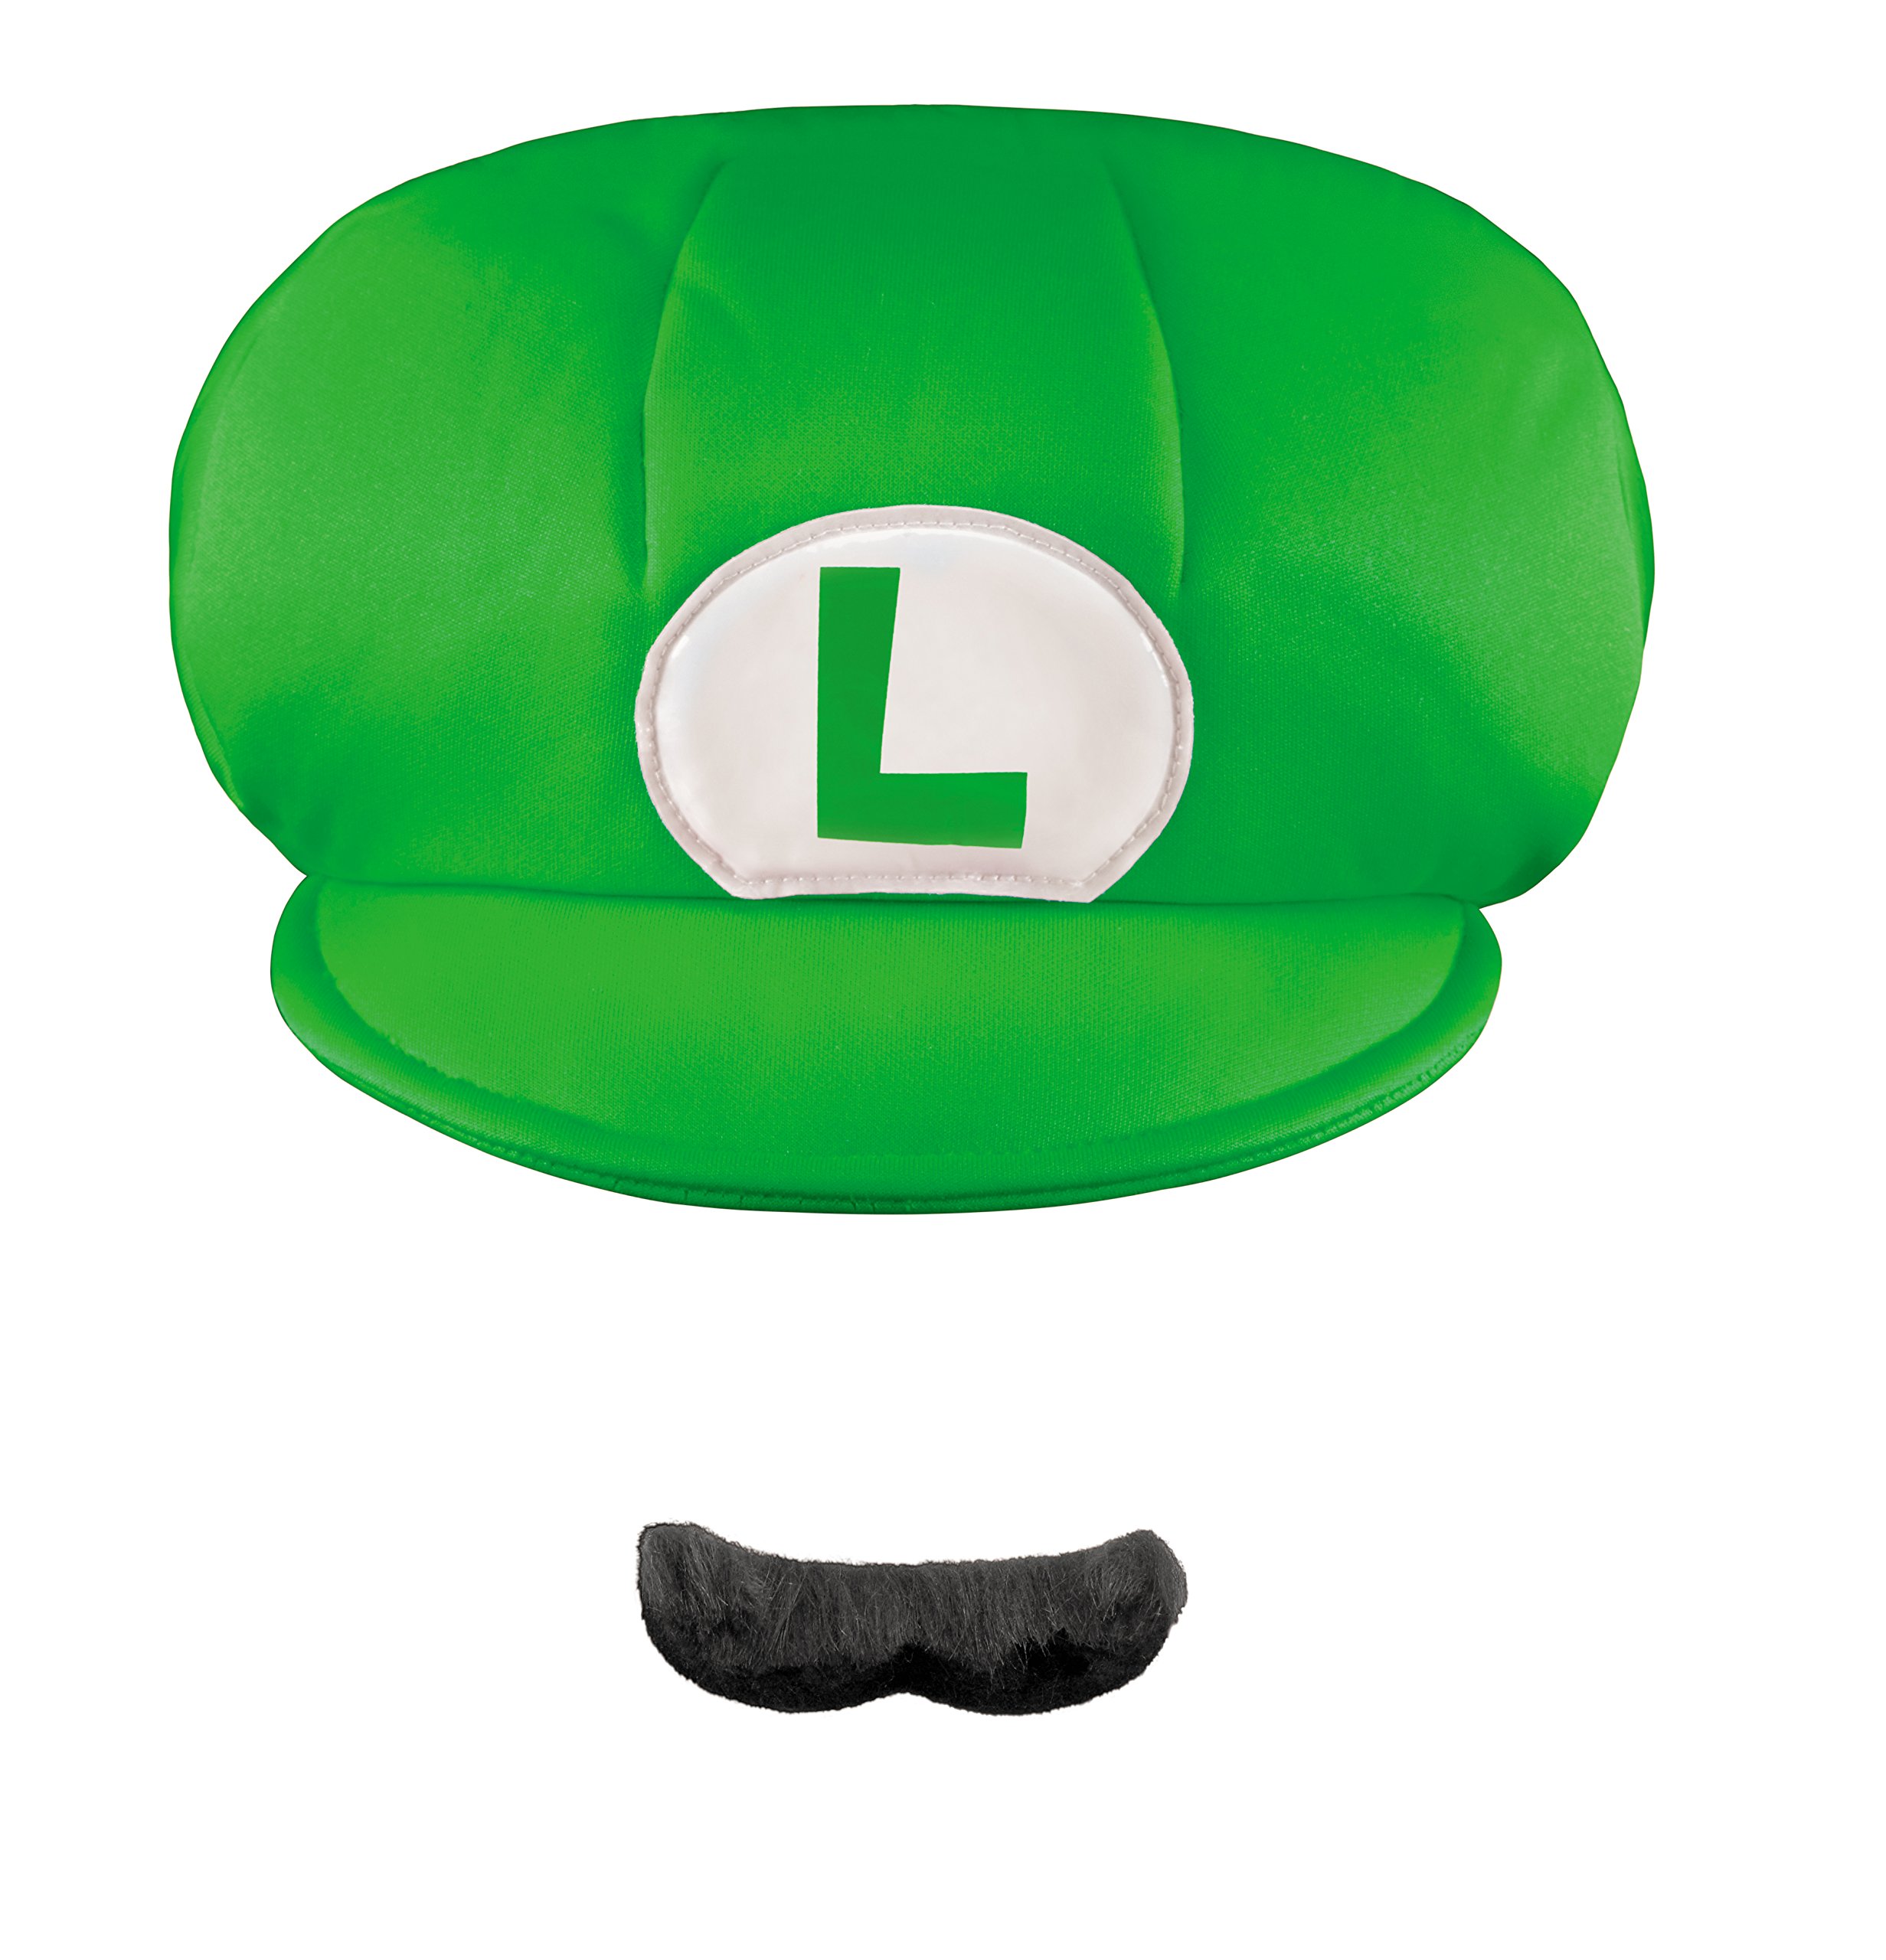 Disguise Luigi Child Hat and Mustache